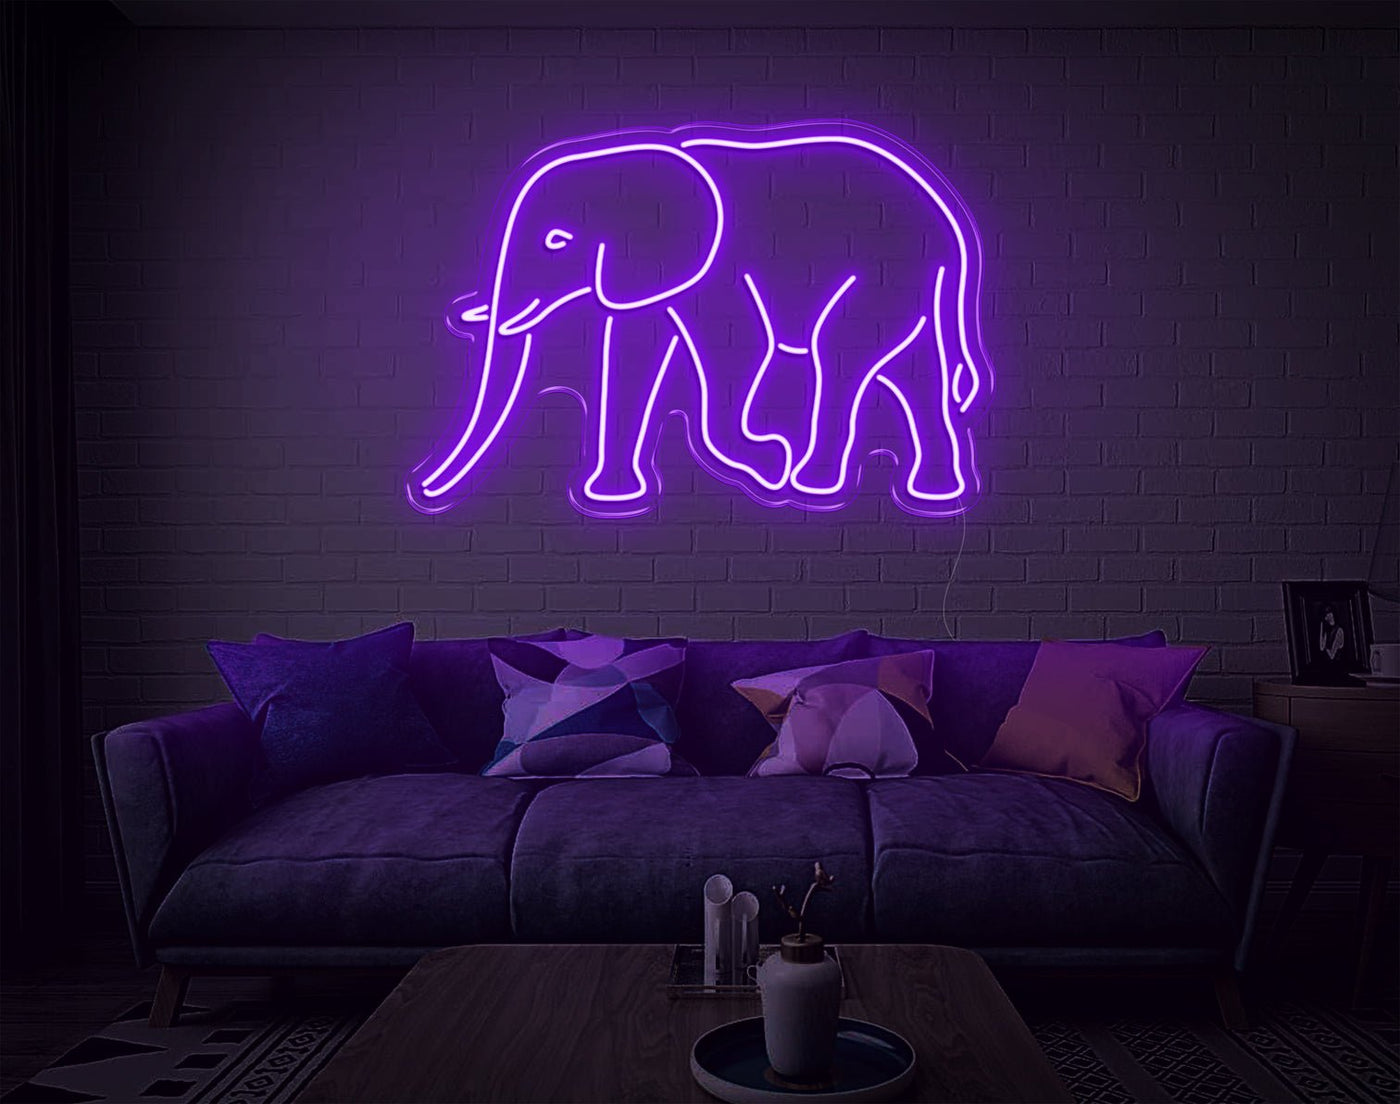 Elephant LED Neon Sign - 7inch x 11inchPurple